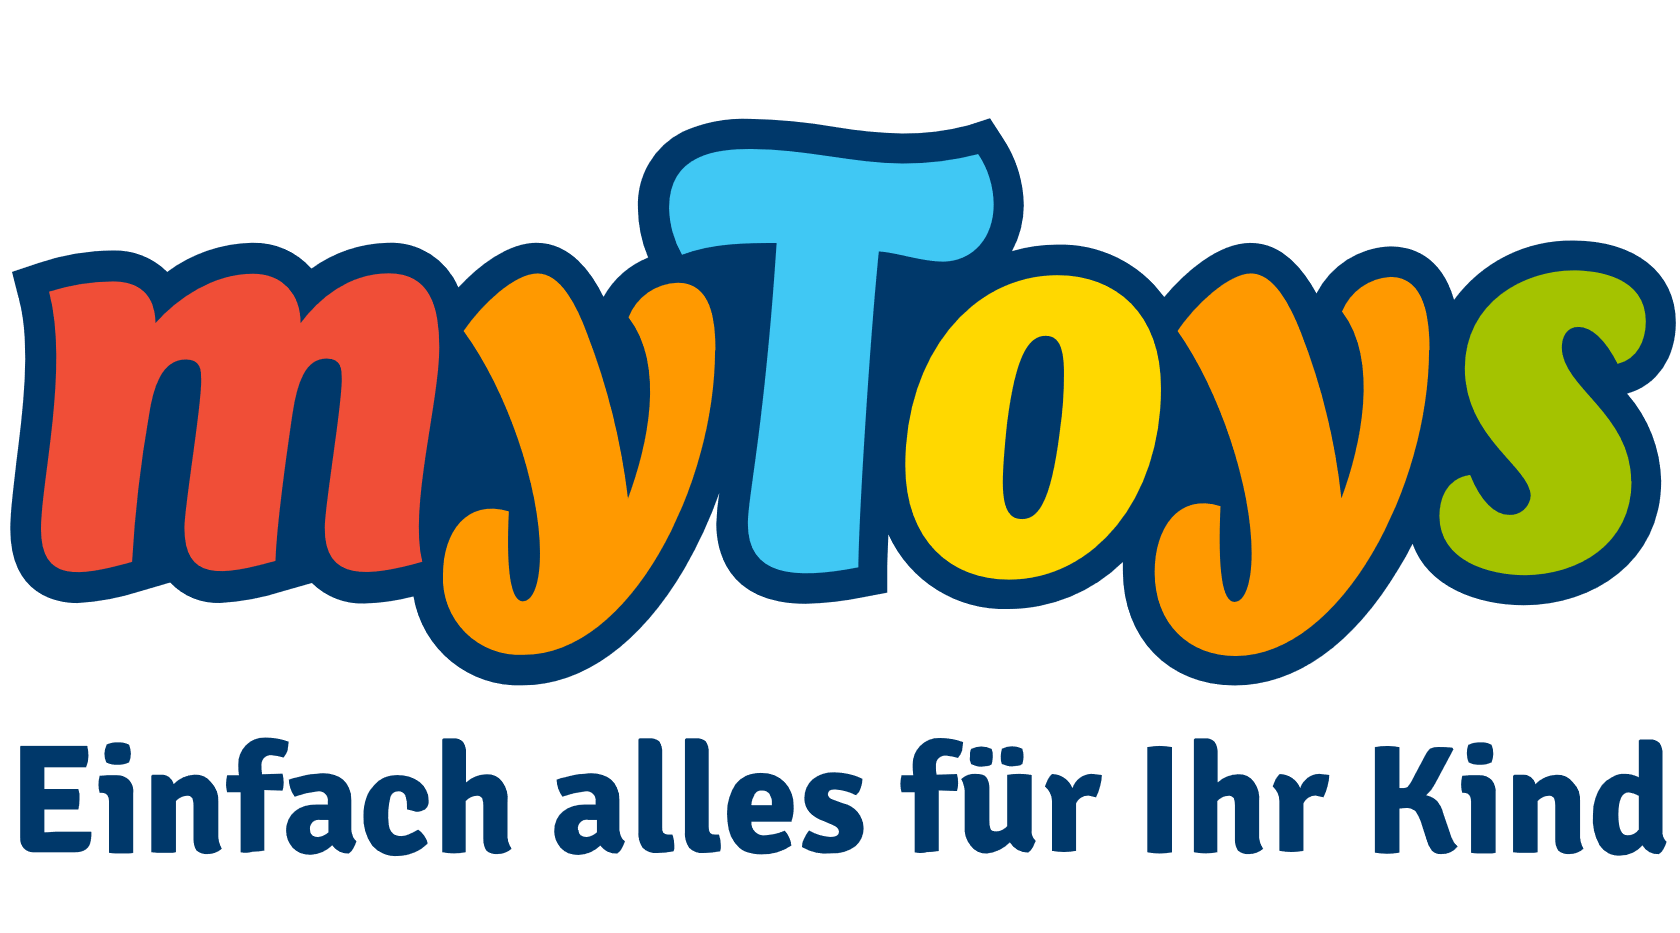 MyToys